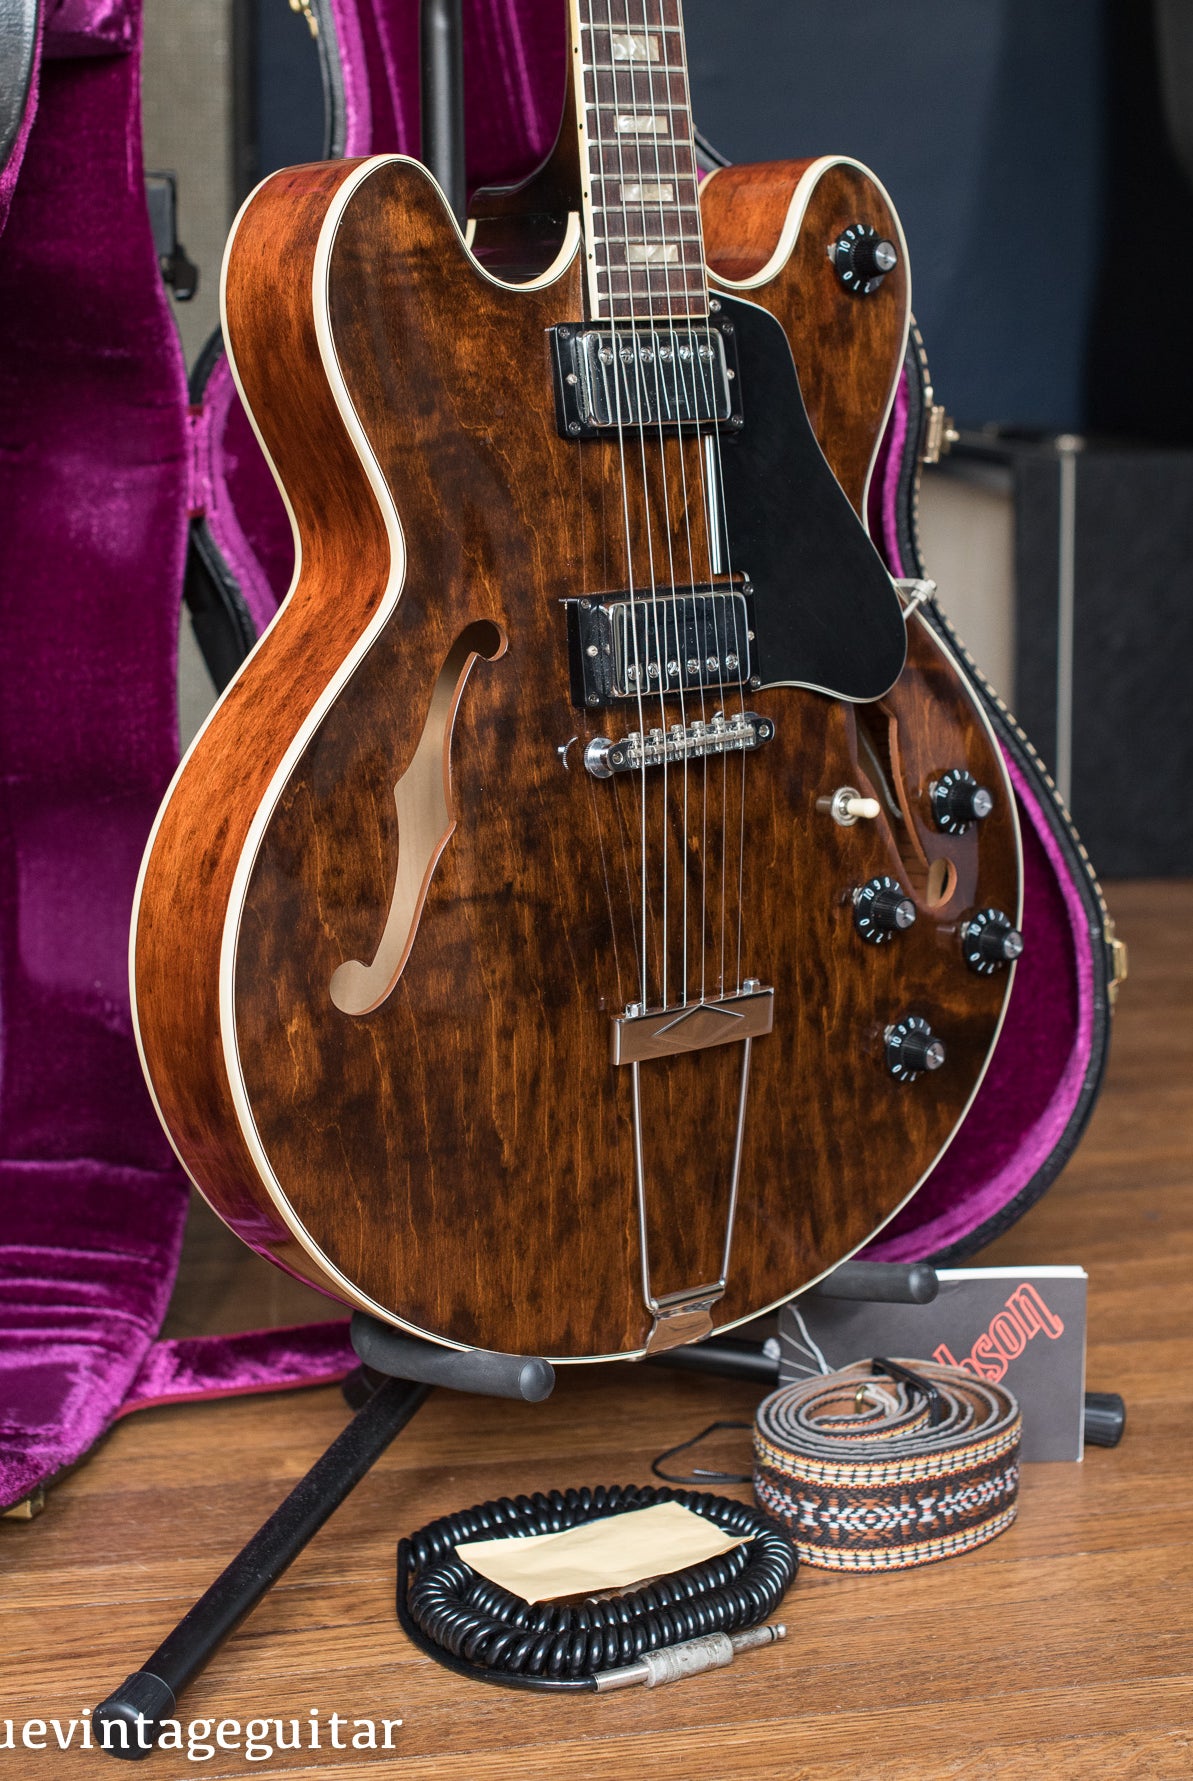 Vintage 1969 Gibson ES-150D walnut brown electric guitar